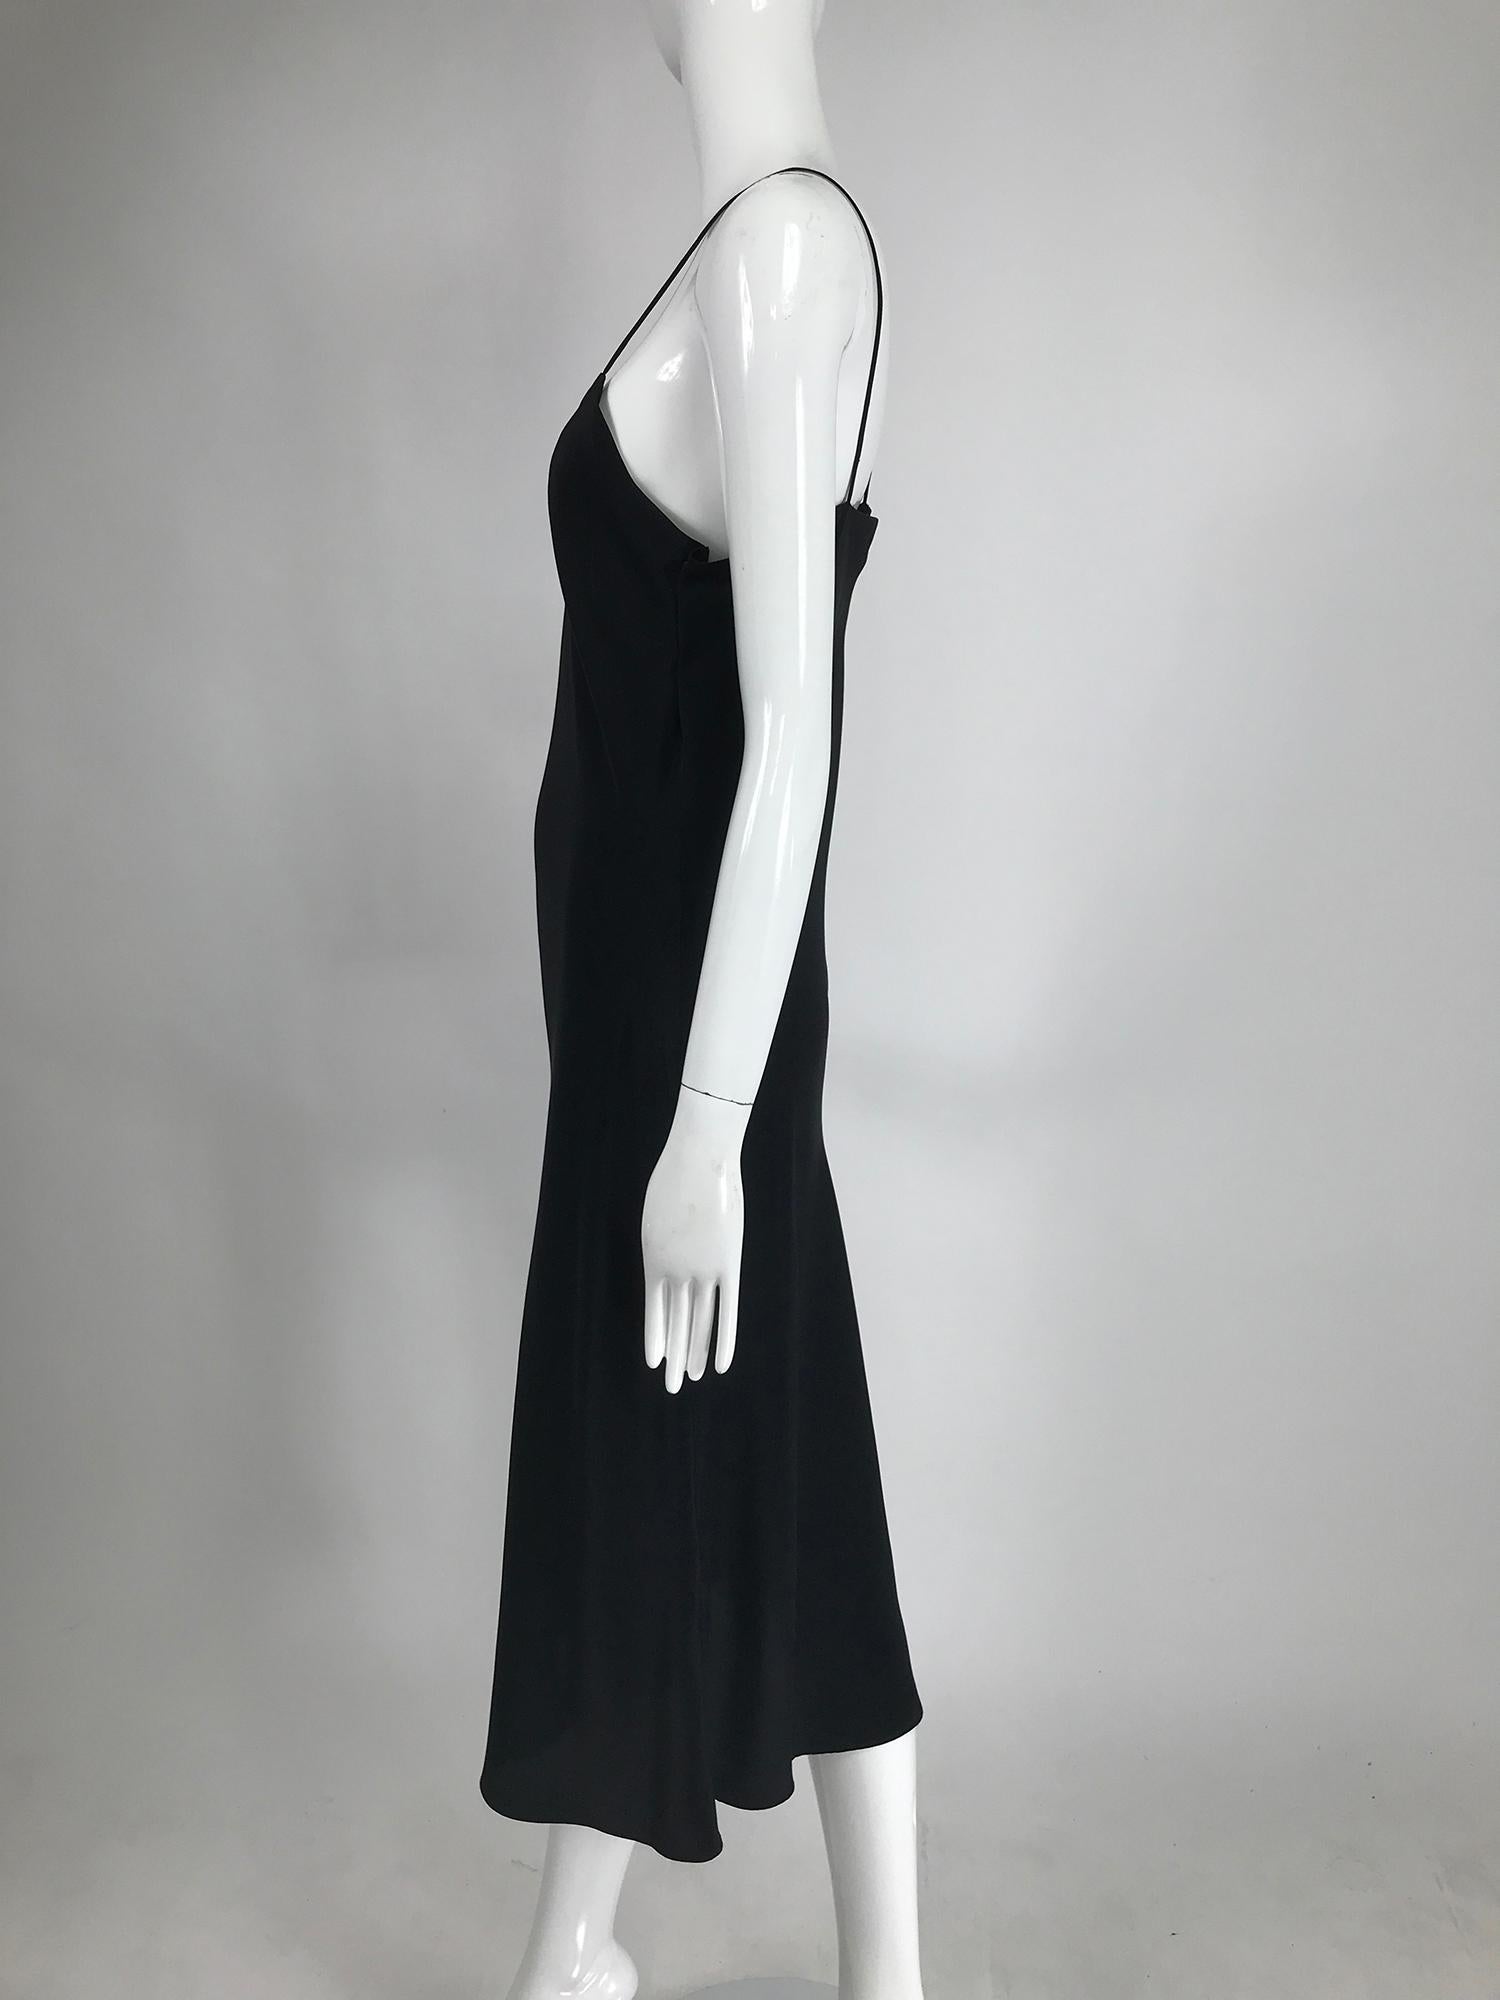 Adolfo Black Bias Cut Silk Slip Dress and Silk Chiffon Cape Set 1970s ...